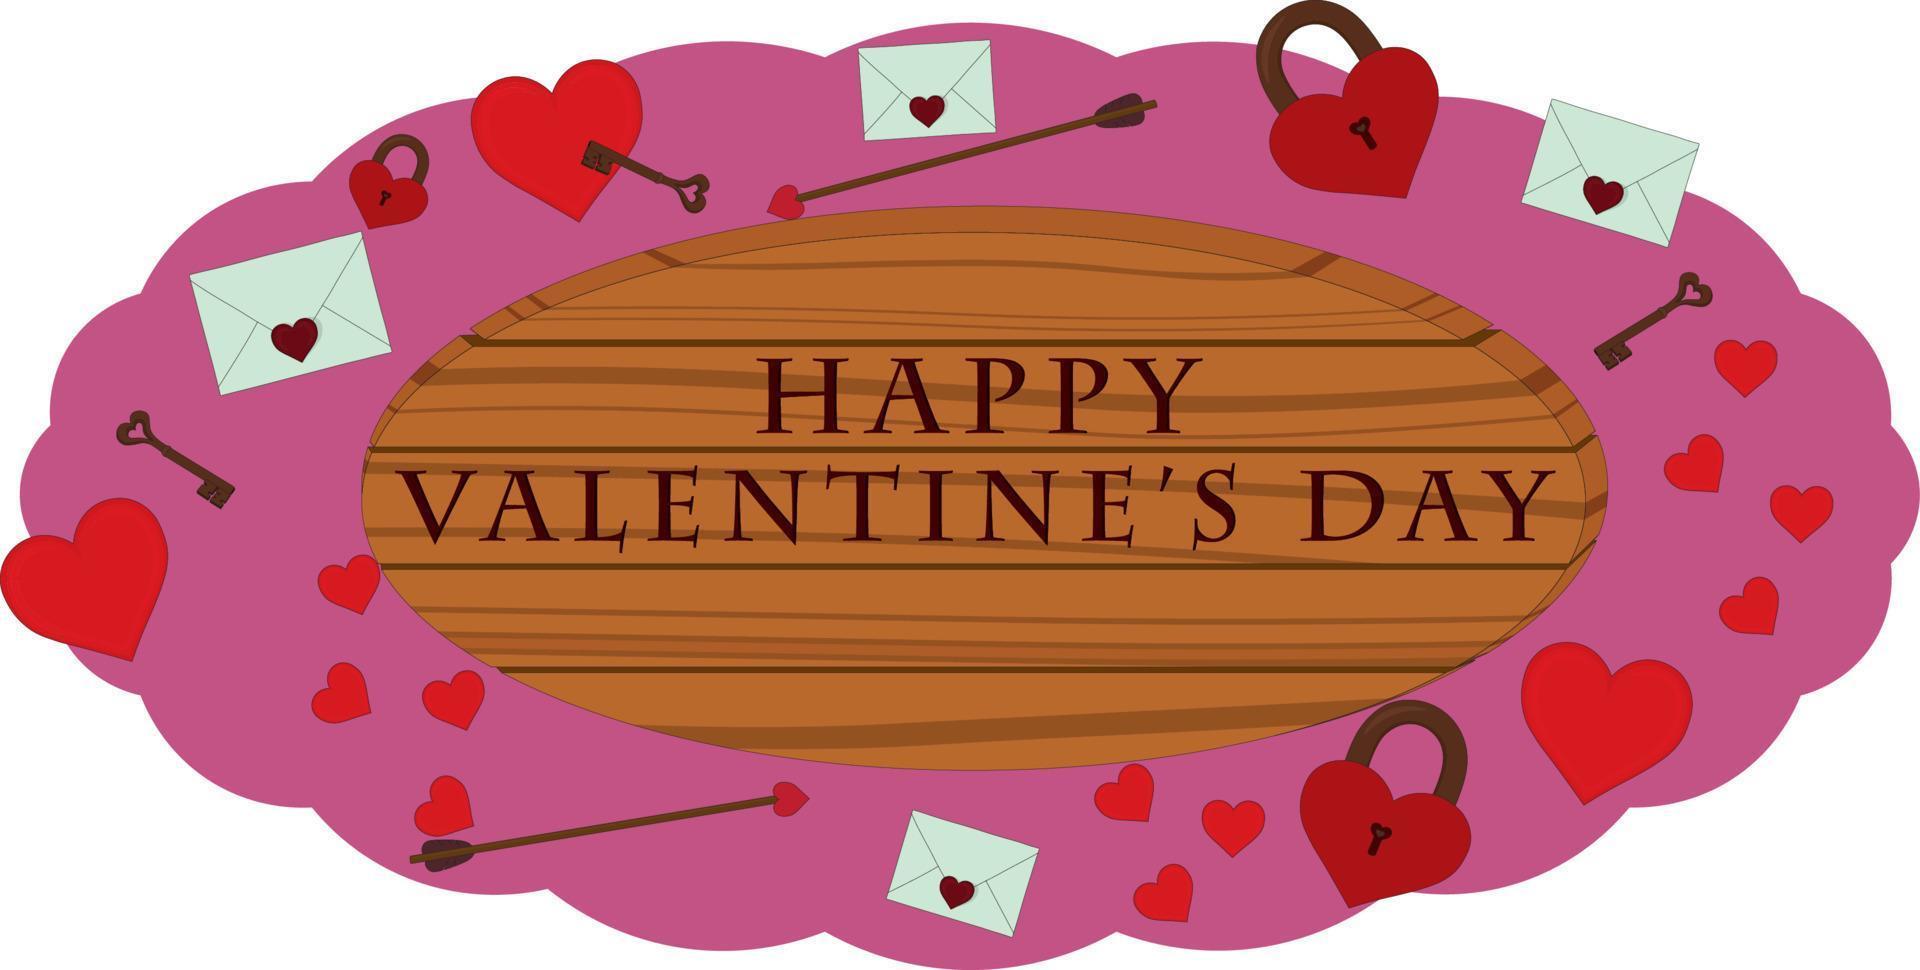 Happy Valentine's Day Holzschild verziert mit Herz-Vektor-Illustration vektor